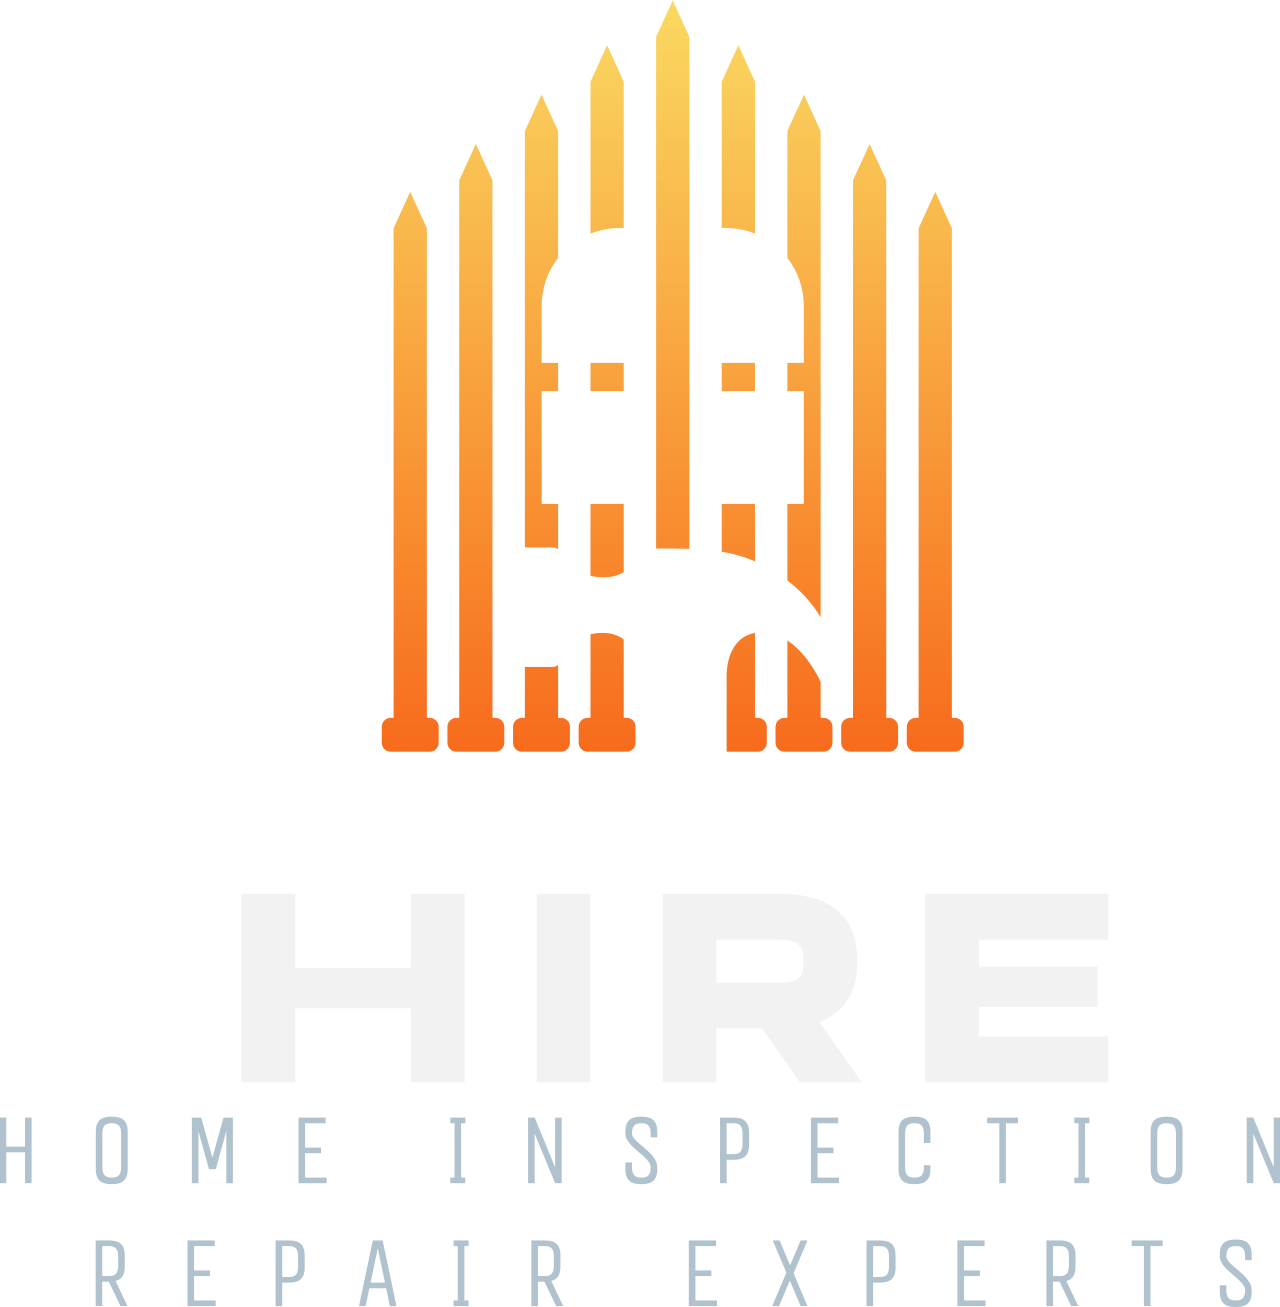 HIRE's logo